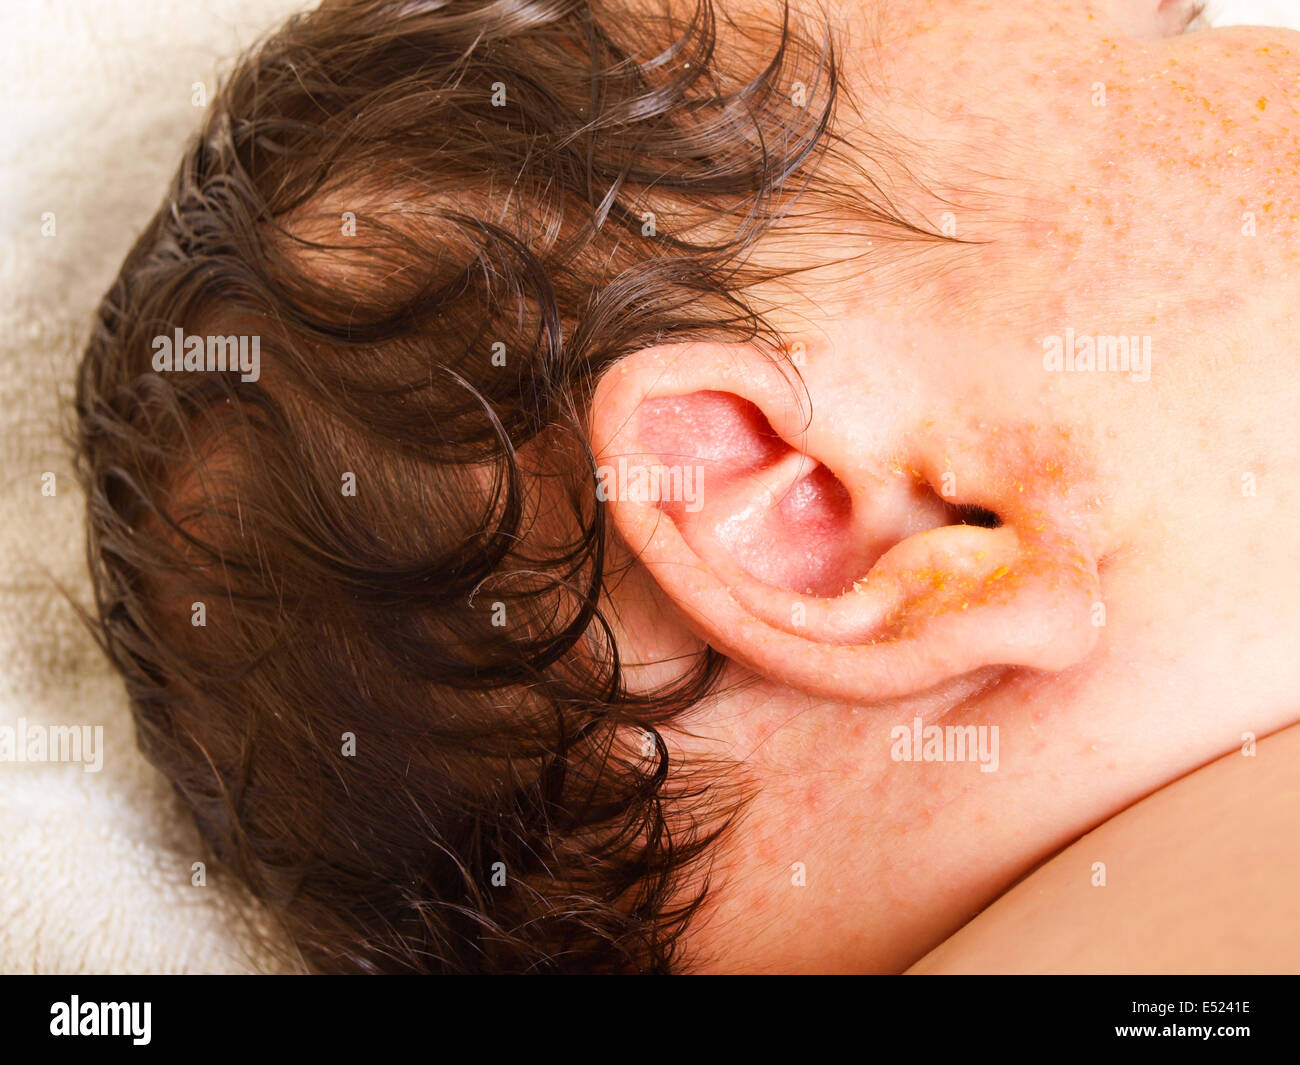 Newborn baby with sensitive skin Stock Photo